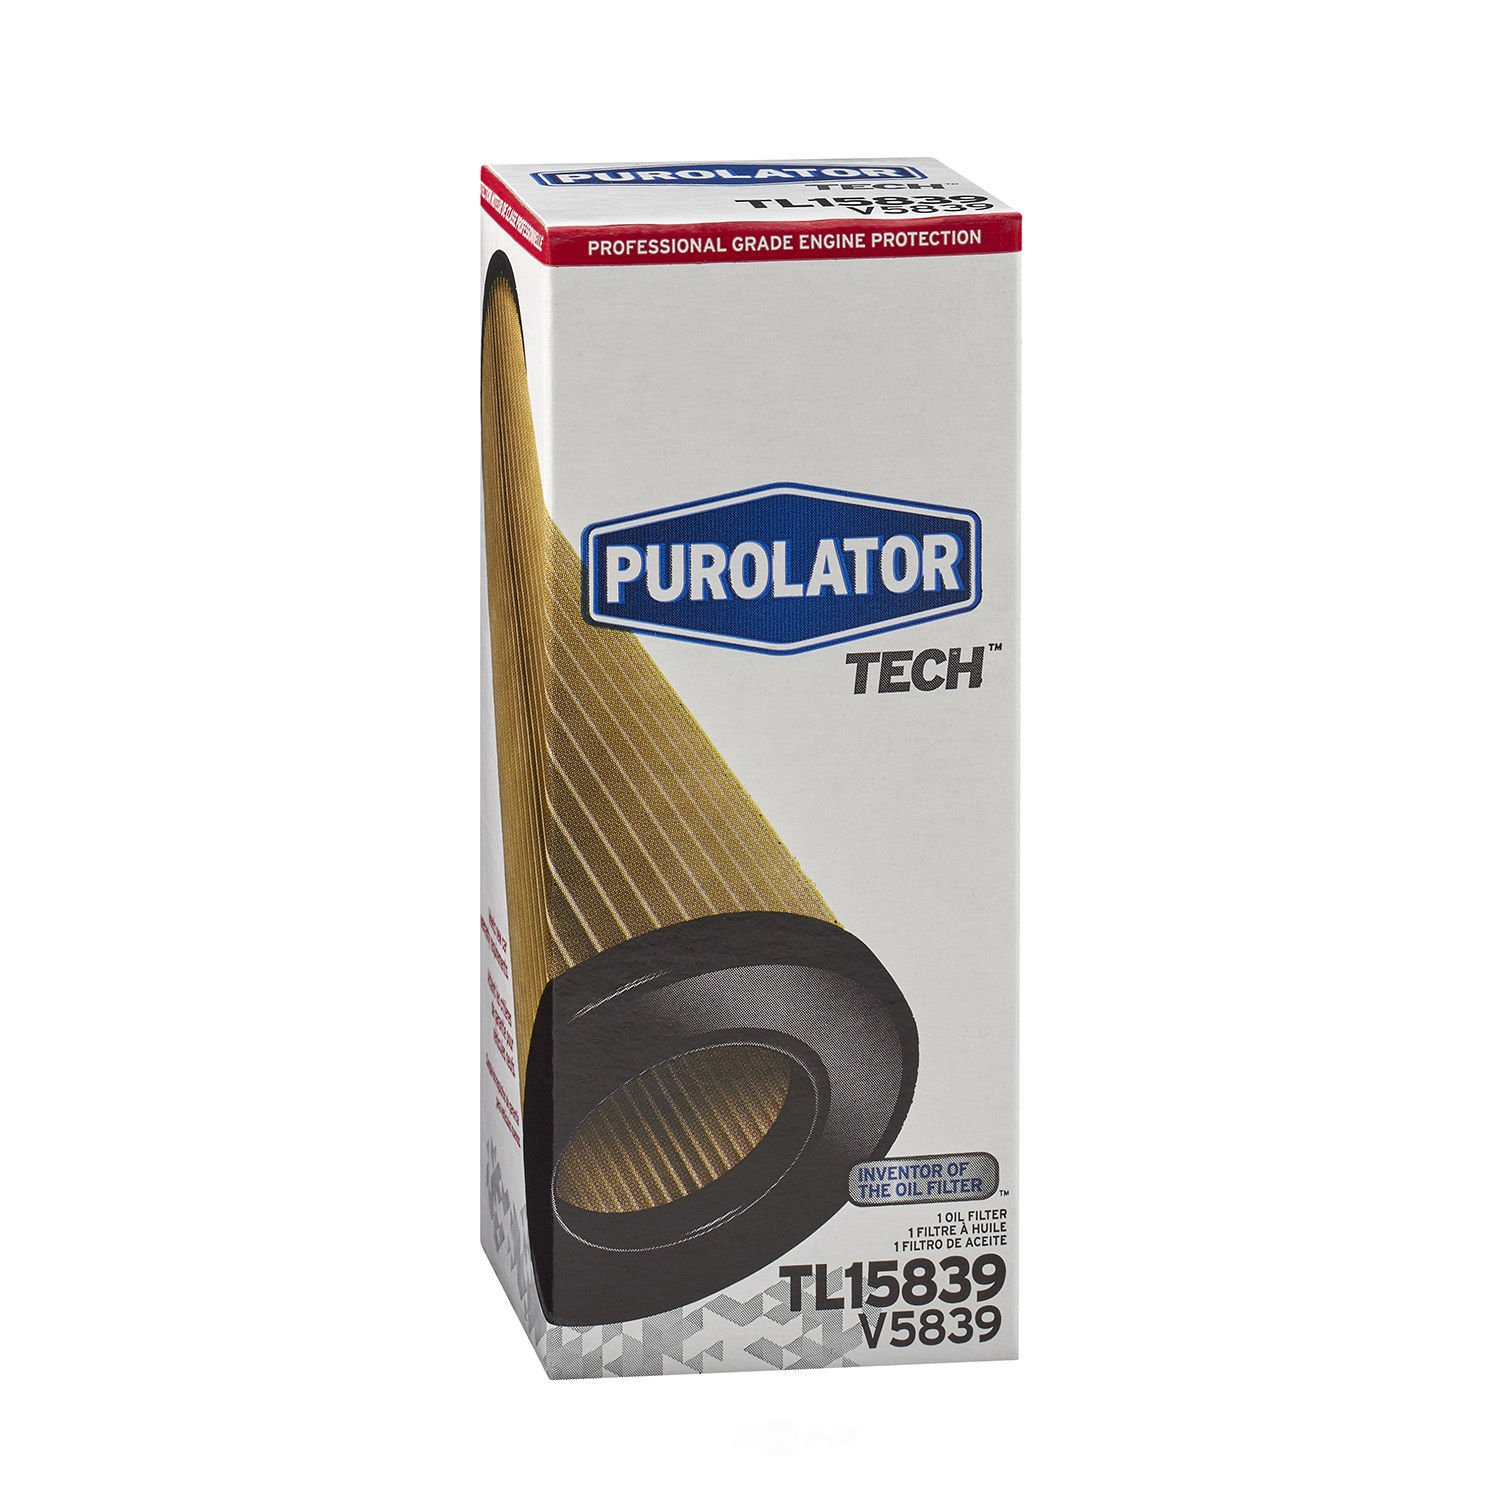 PUROLATOR - Purolator TECH - Professional Use - PUR TL15839